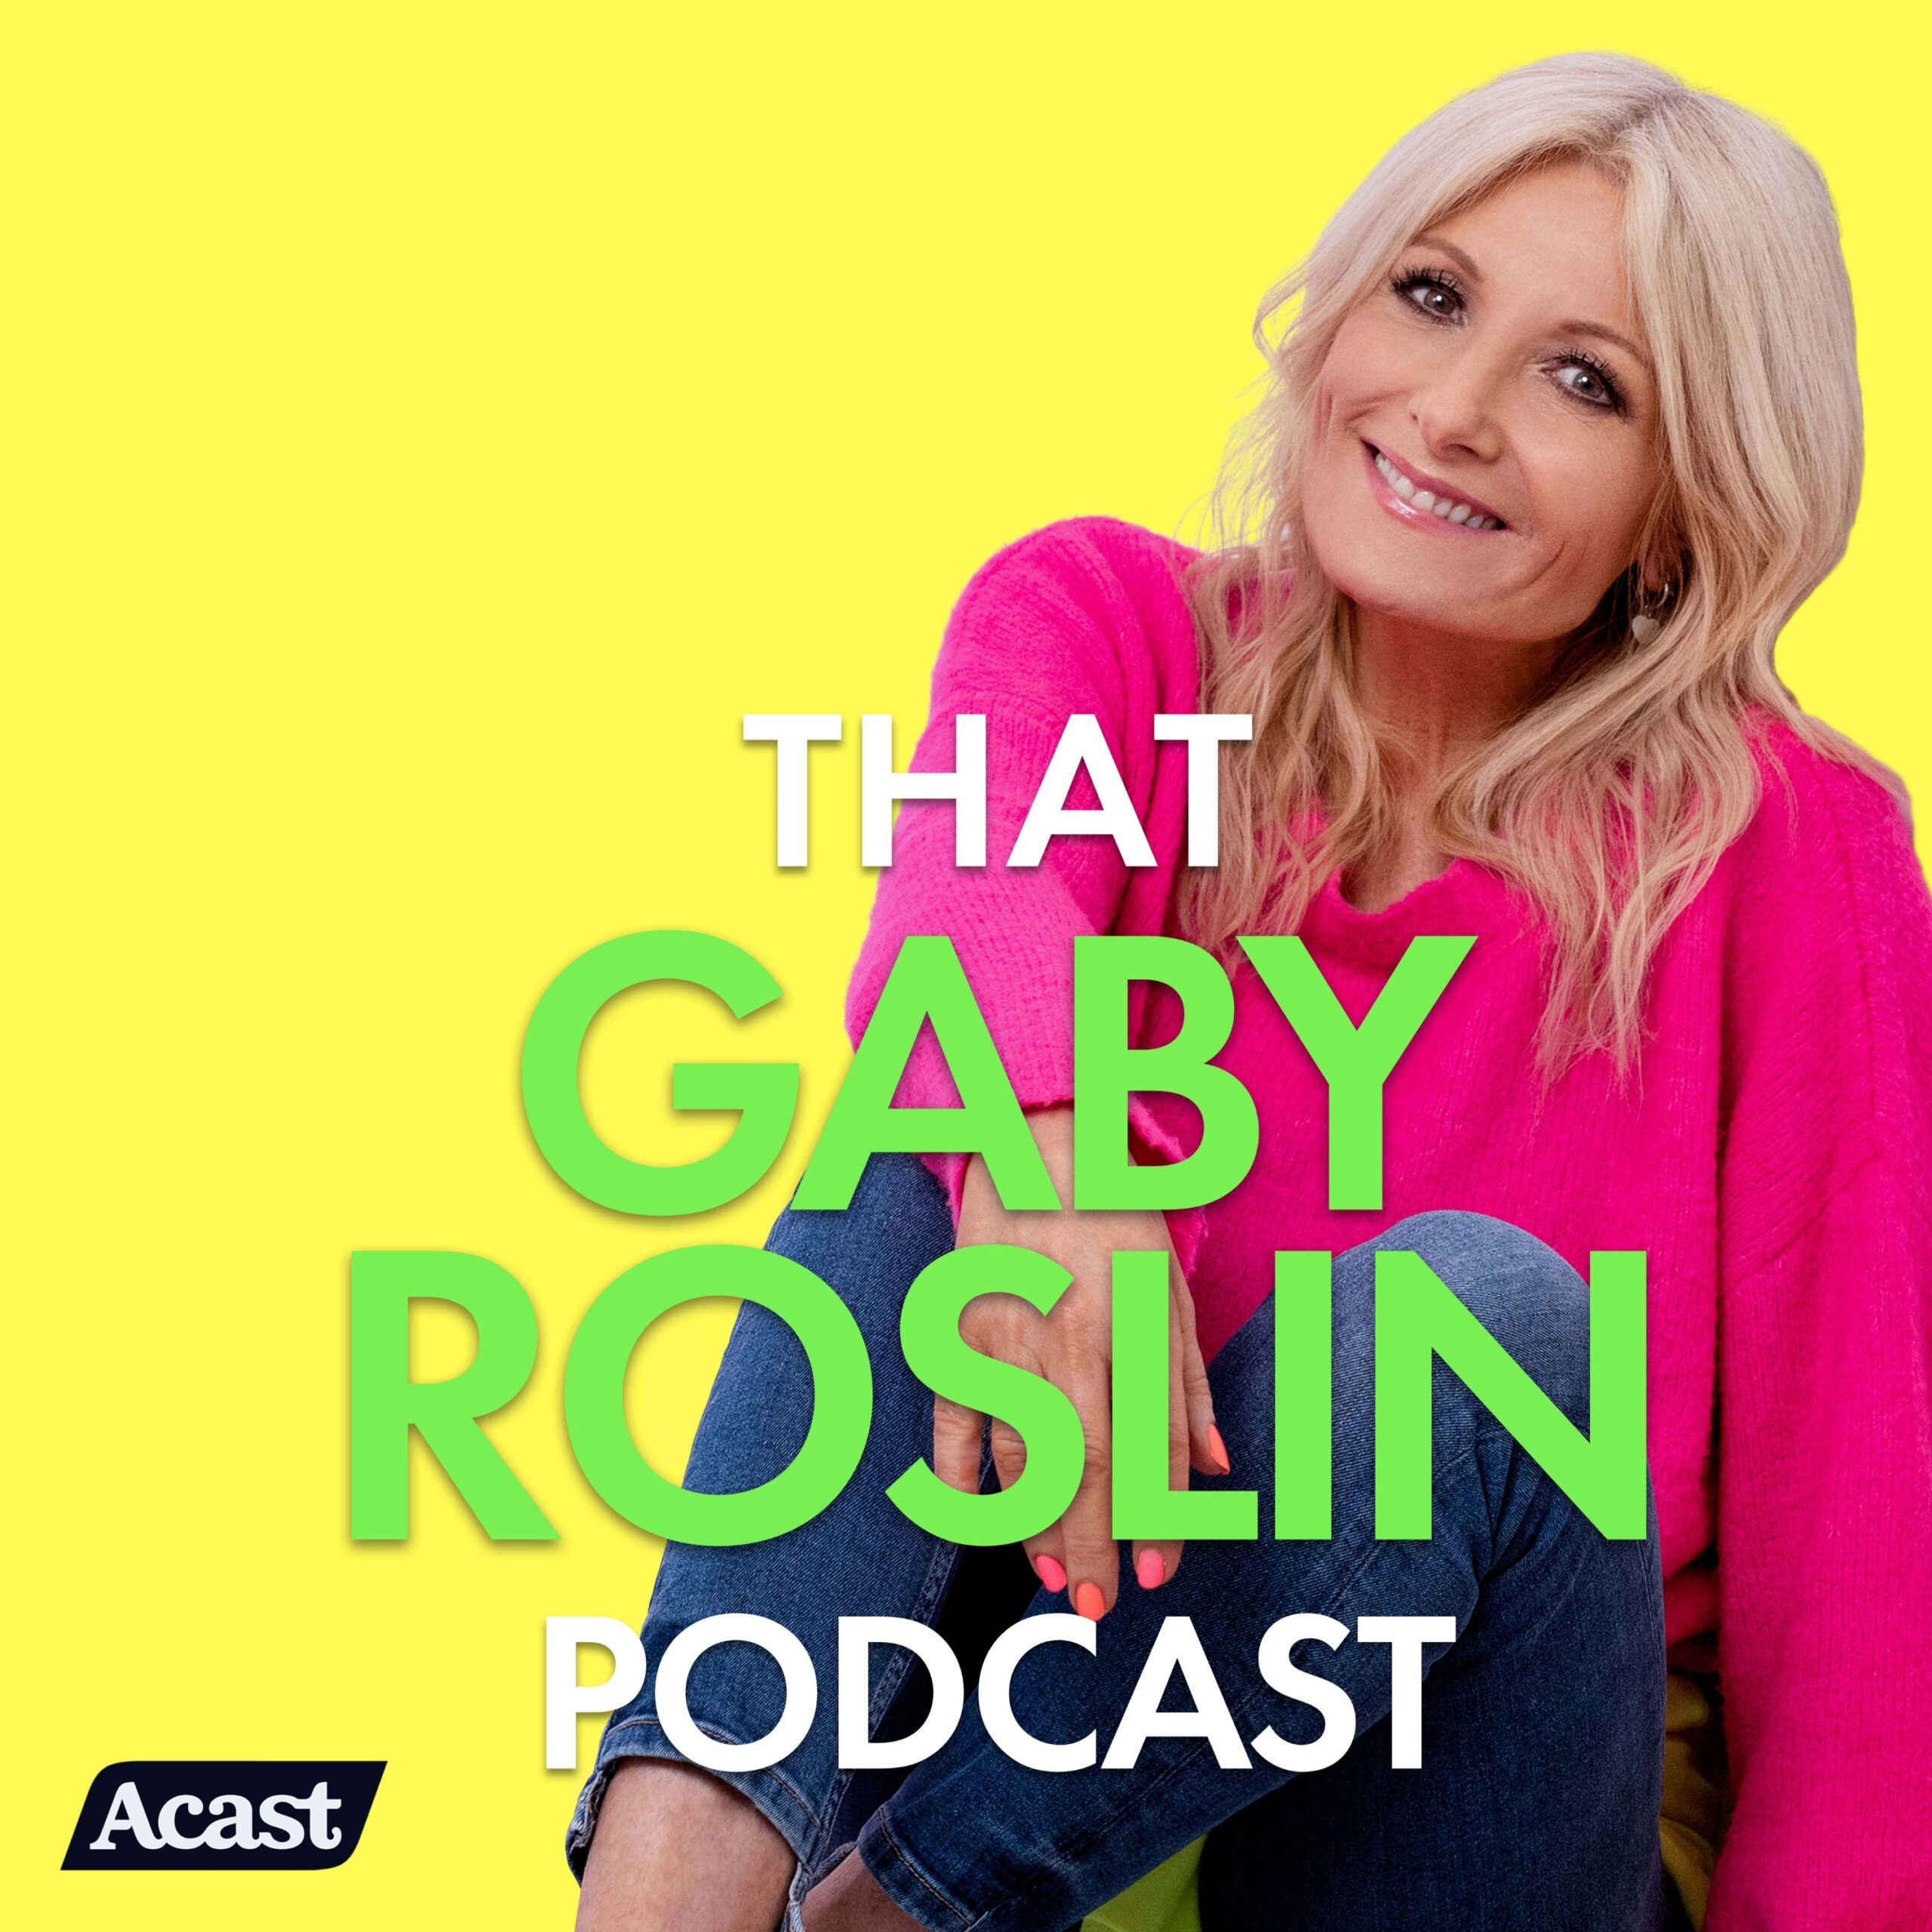 That Gaby Roslin Podcast logo